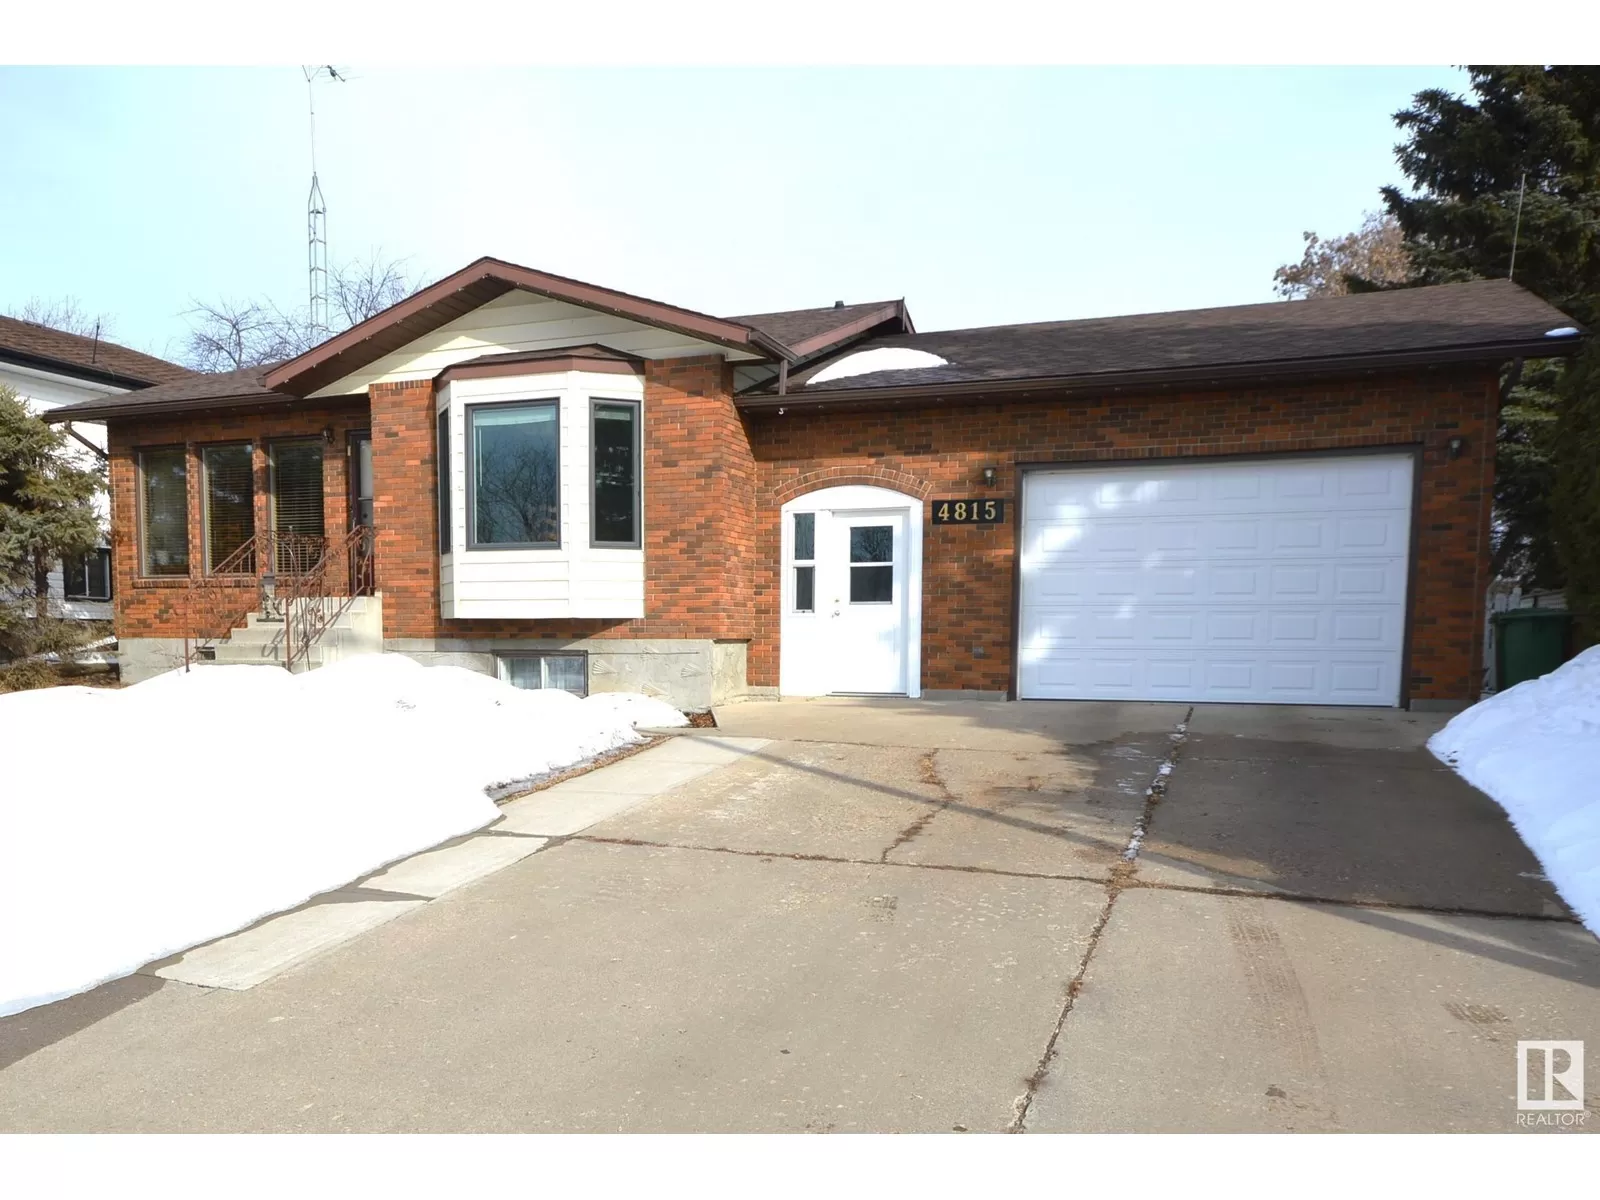 House for rent: 4815 Lakeshore Dr, Bonnyville Town, Alberta T9N 1P2